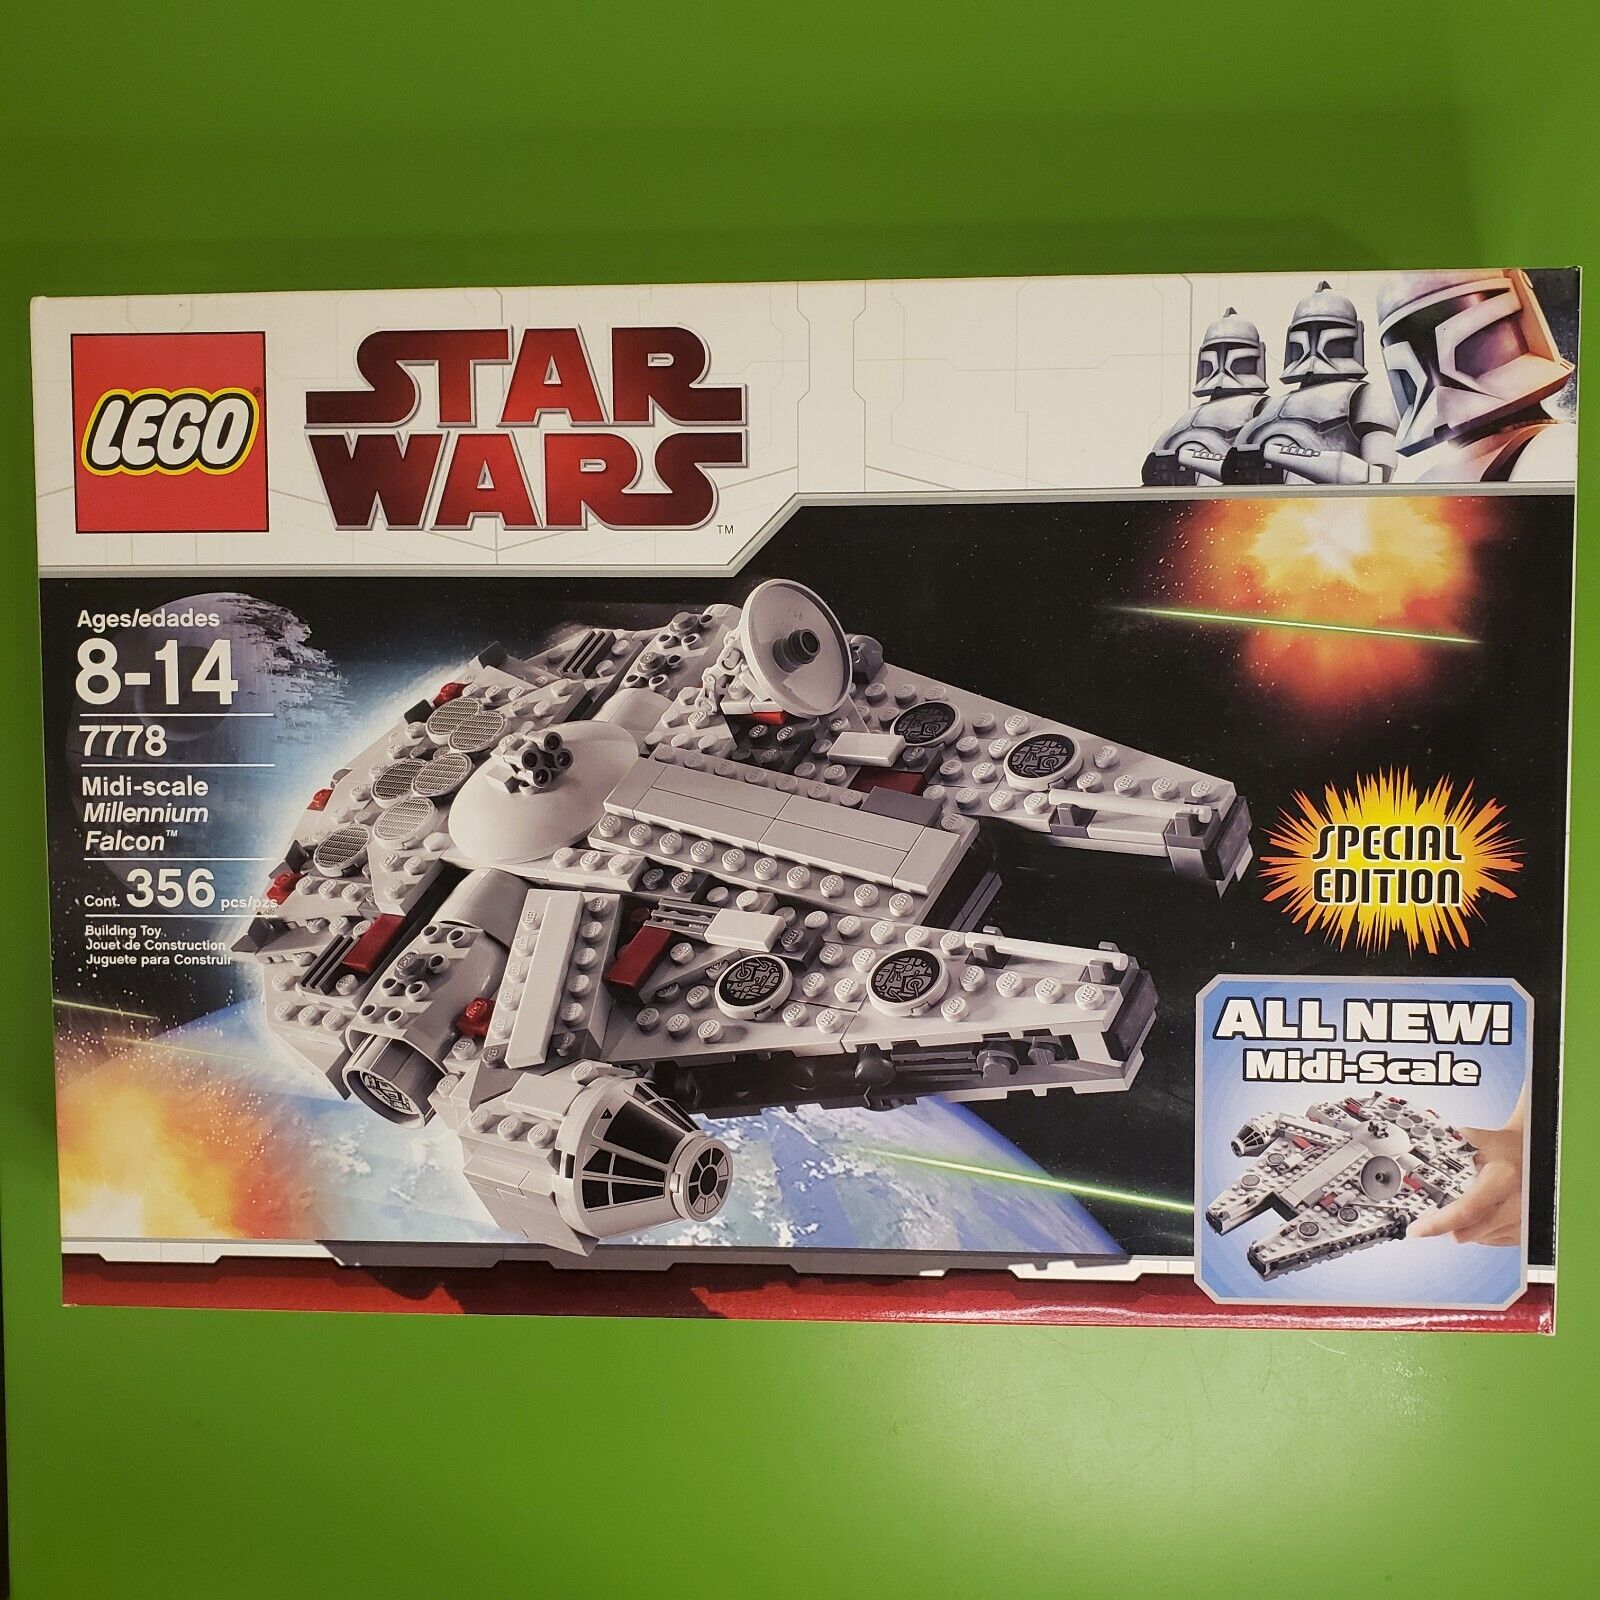 LEGO Star Wars: Midi-scale Millennium Falcon (7778) New Sealed Box. Look!